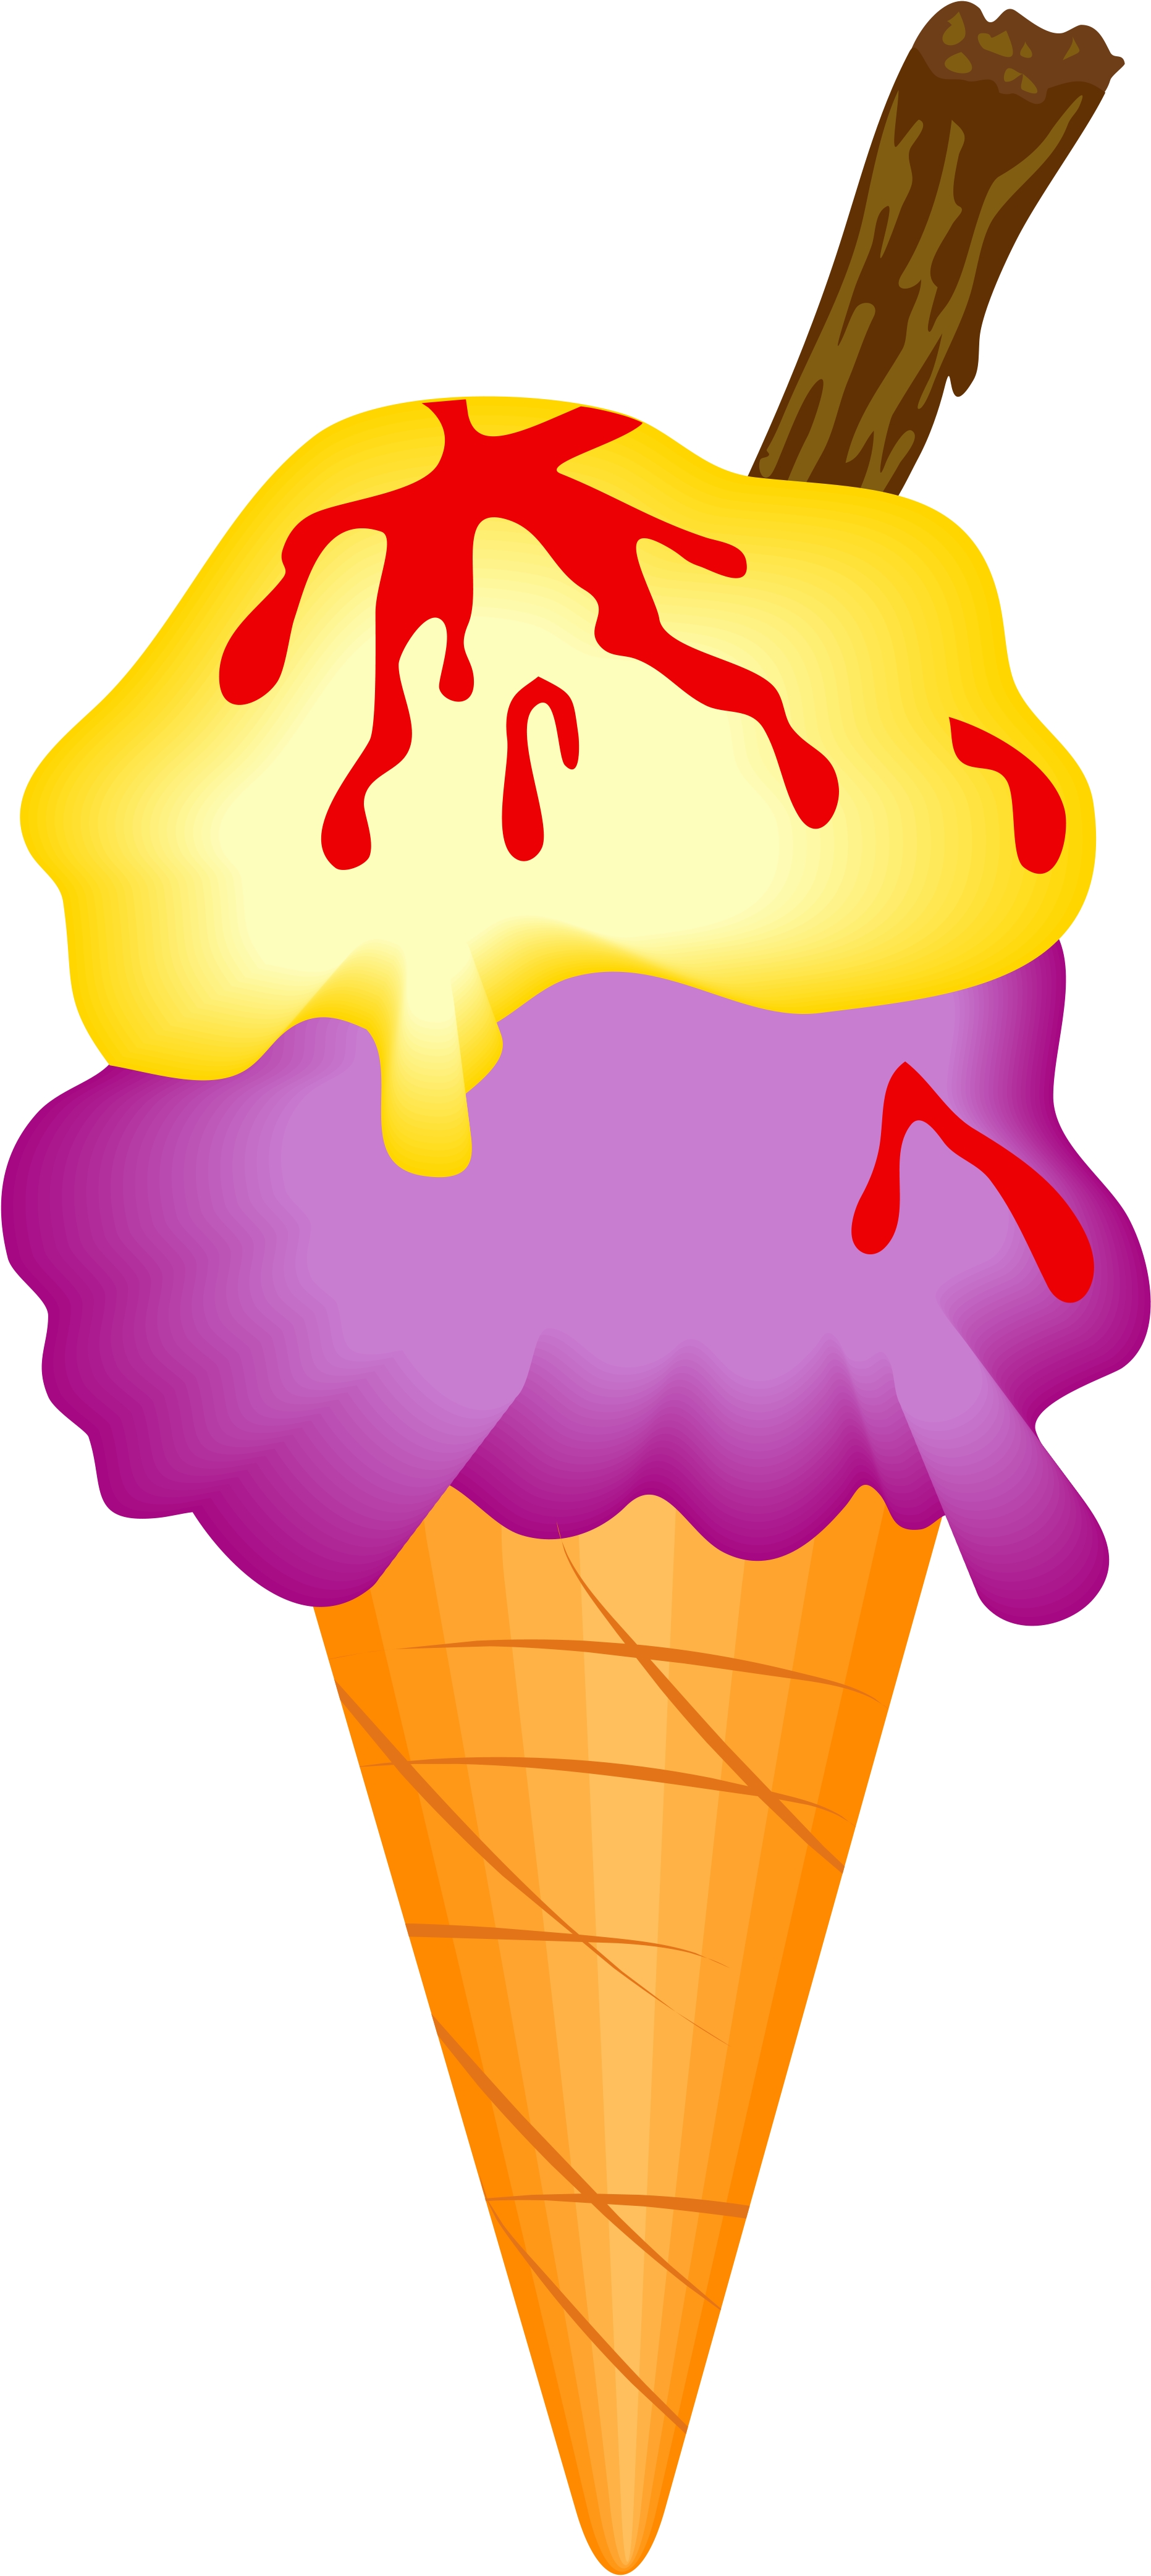 Ice cream cone ice cream free images at clker vector clip art